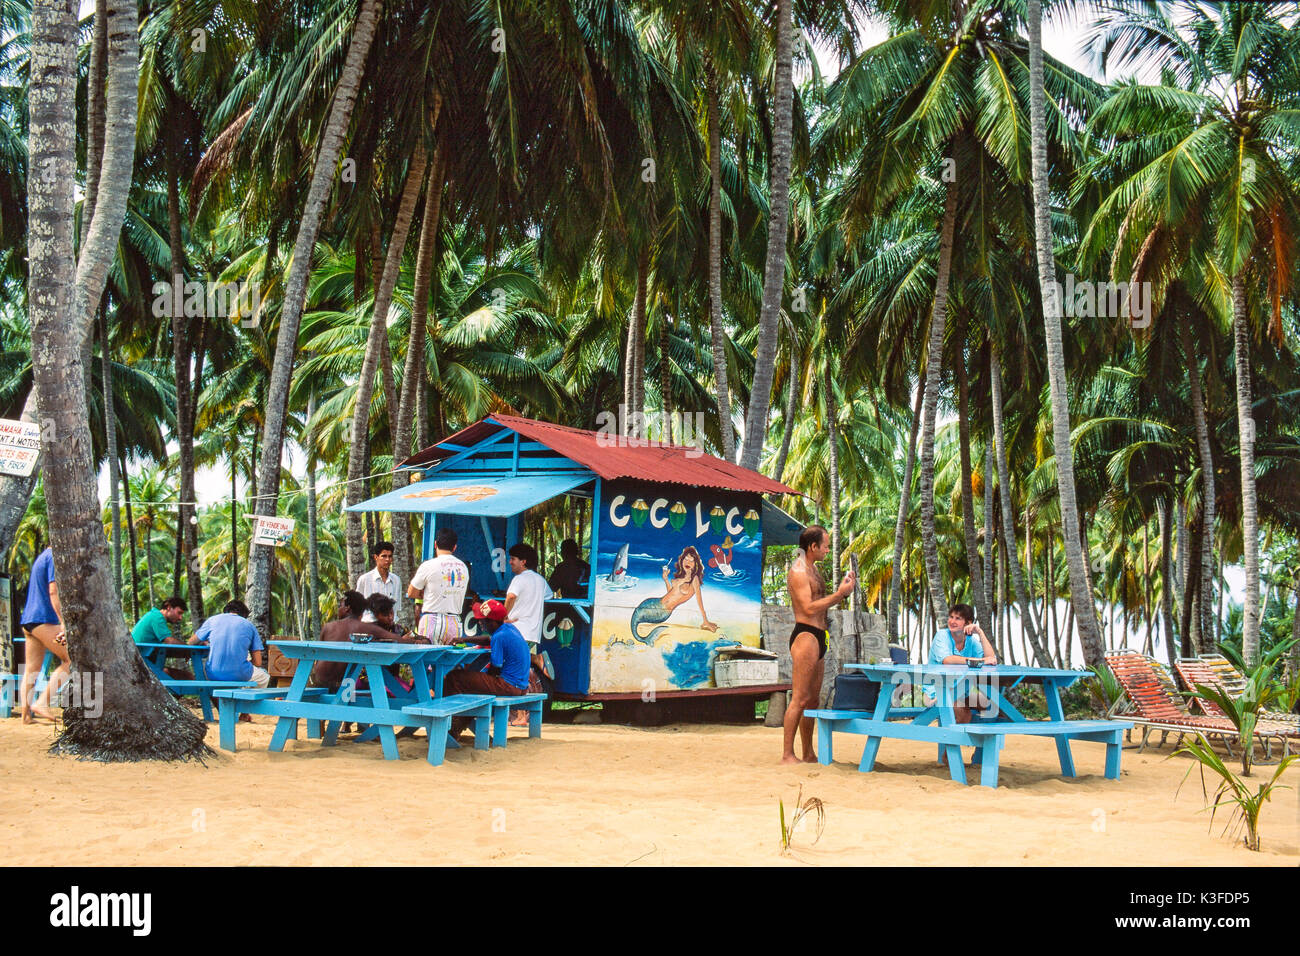 El bar de la playa en Samana, República Dominicana Foto de stock